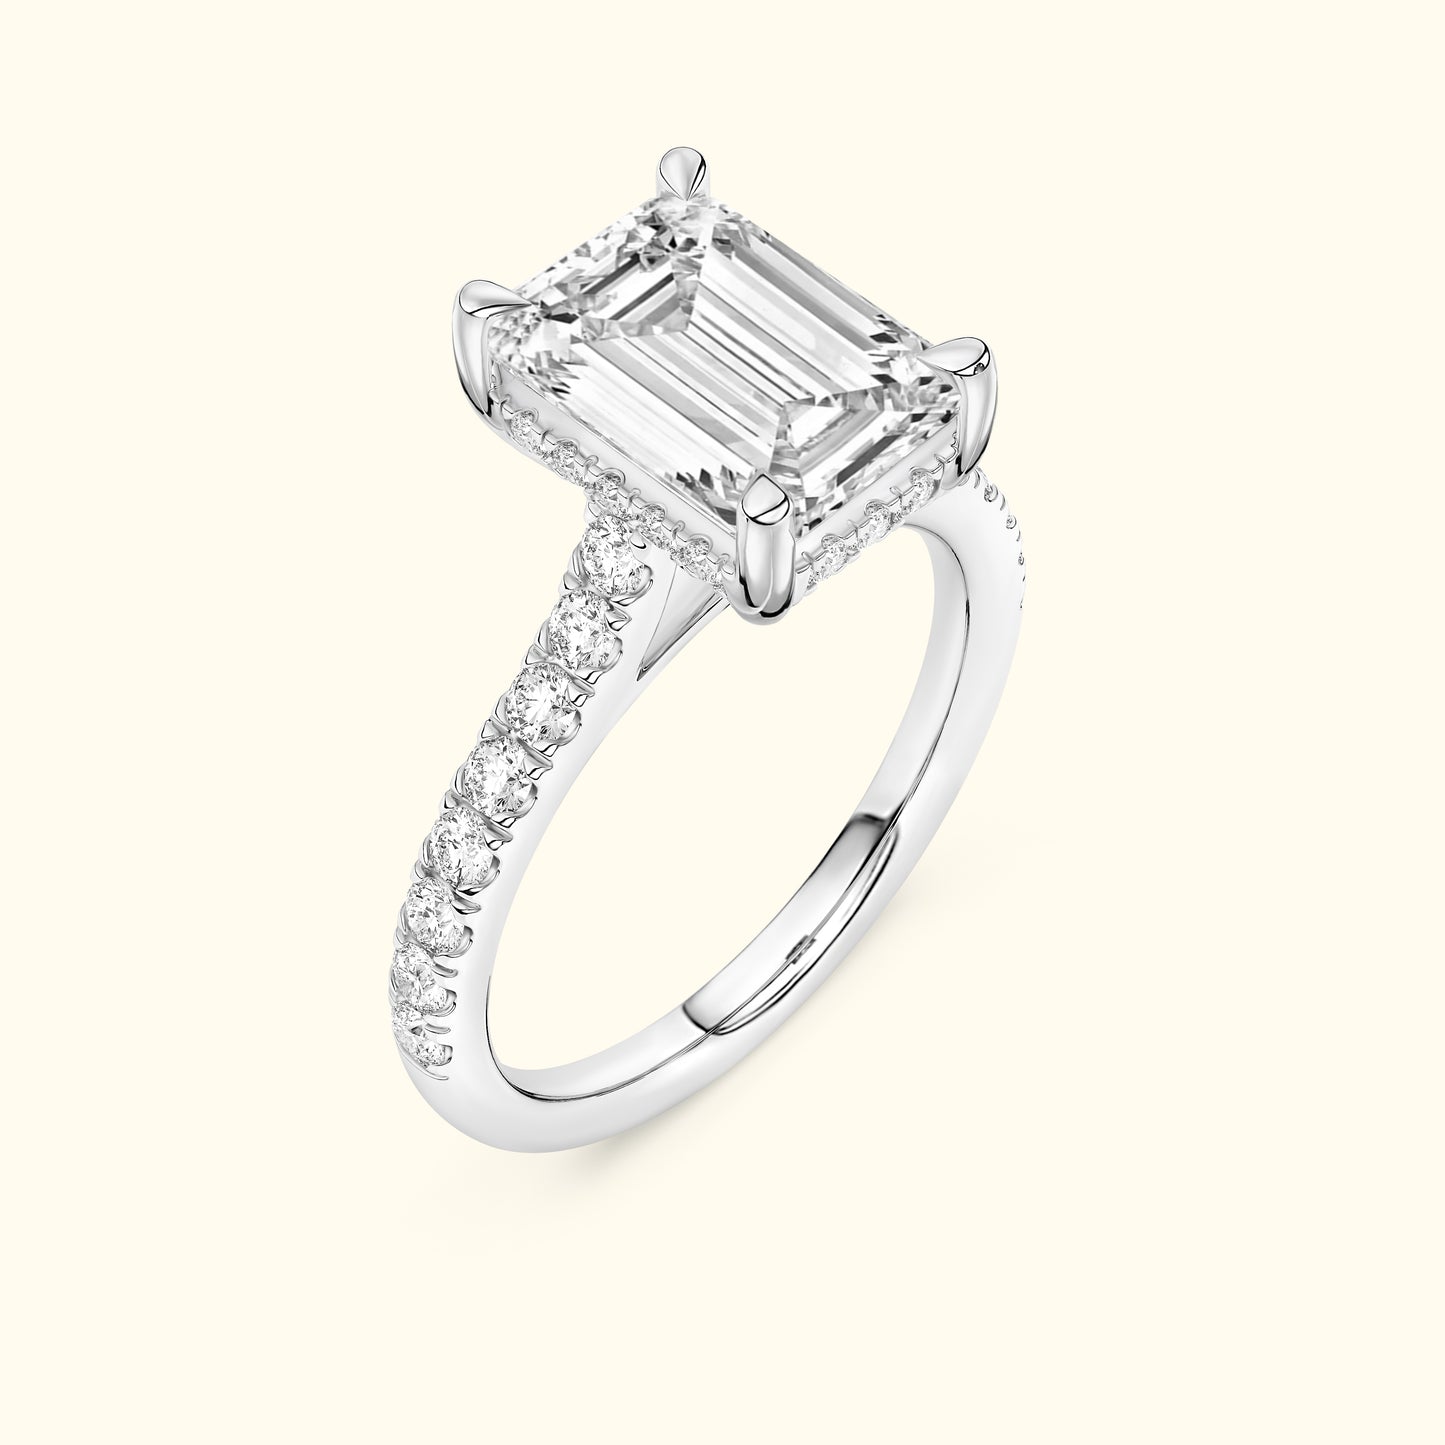 'Elizabeth' Ring with 4.04ct Emerald Diamond